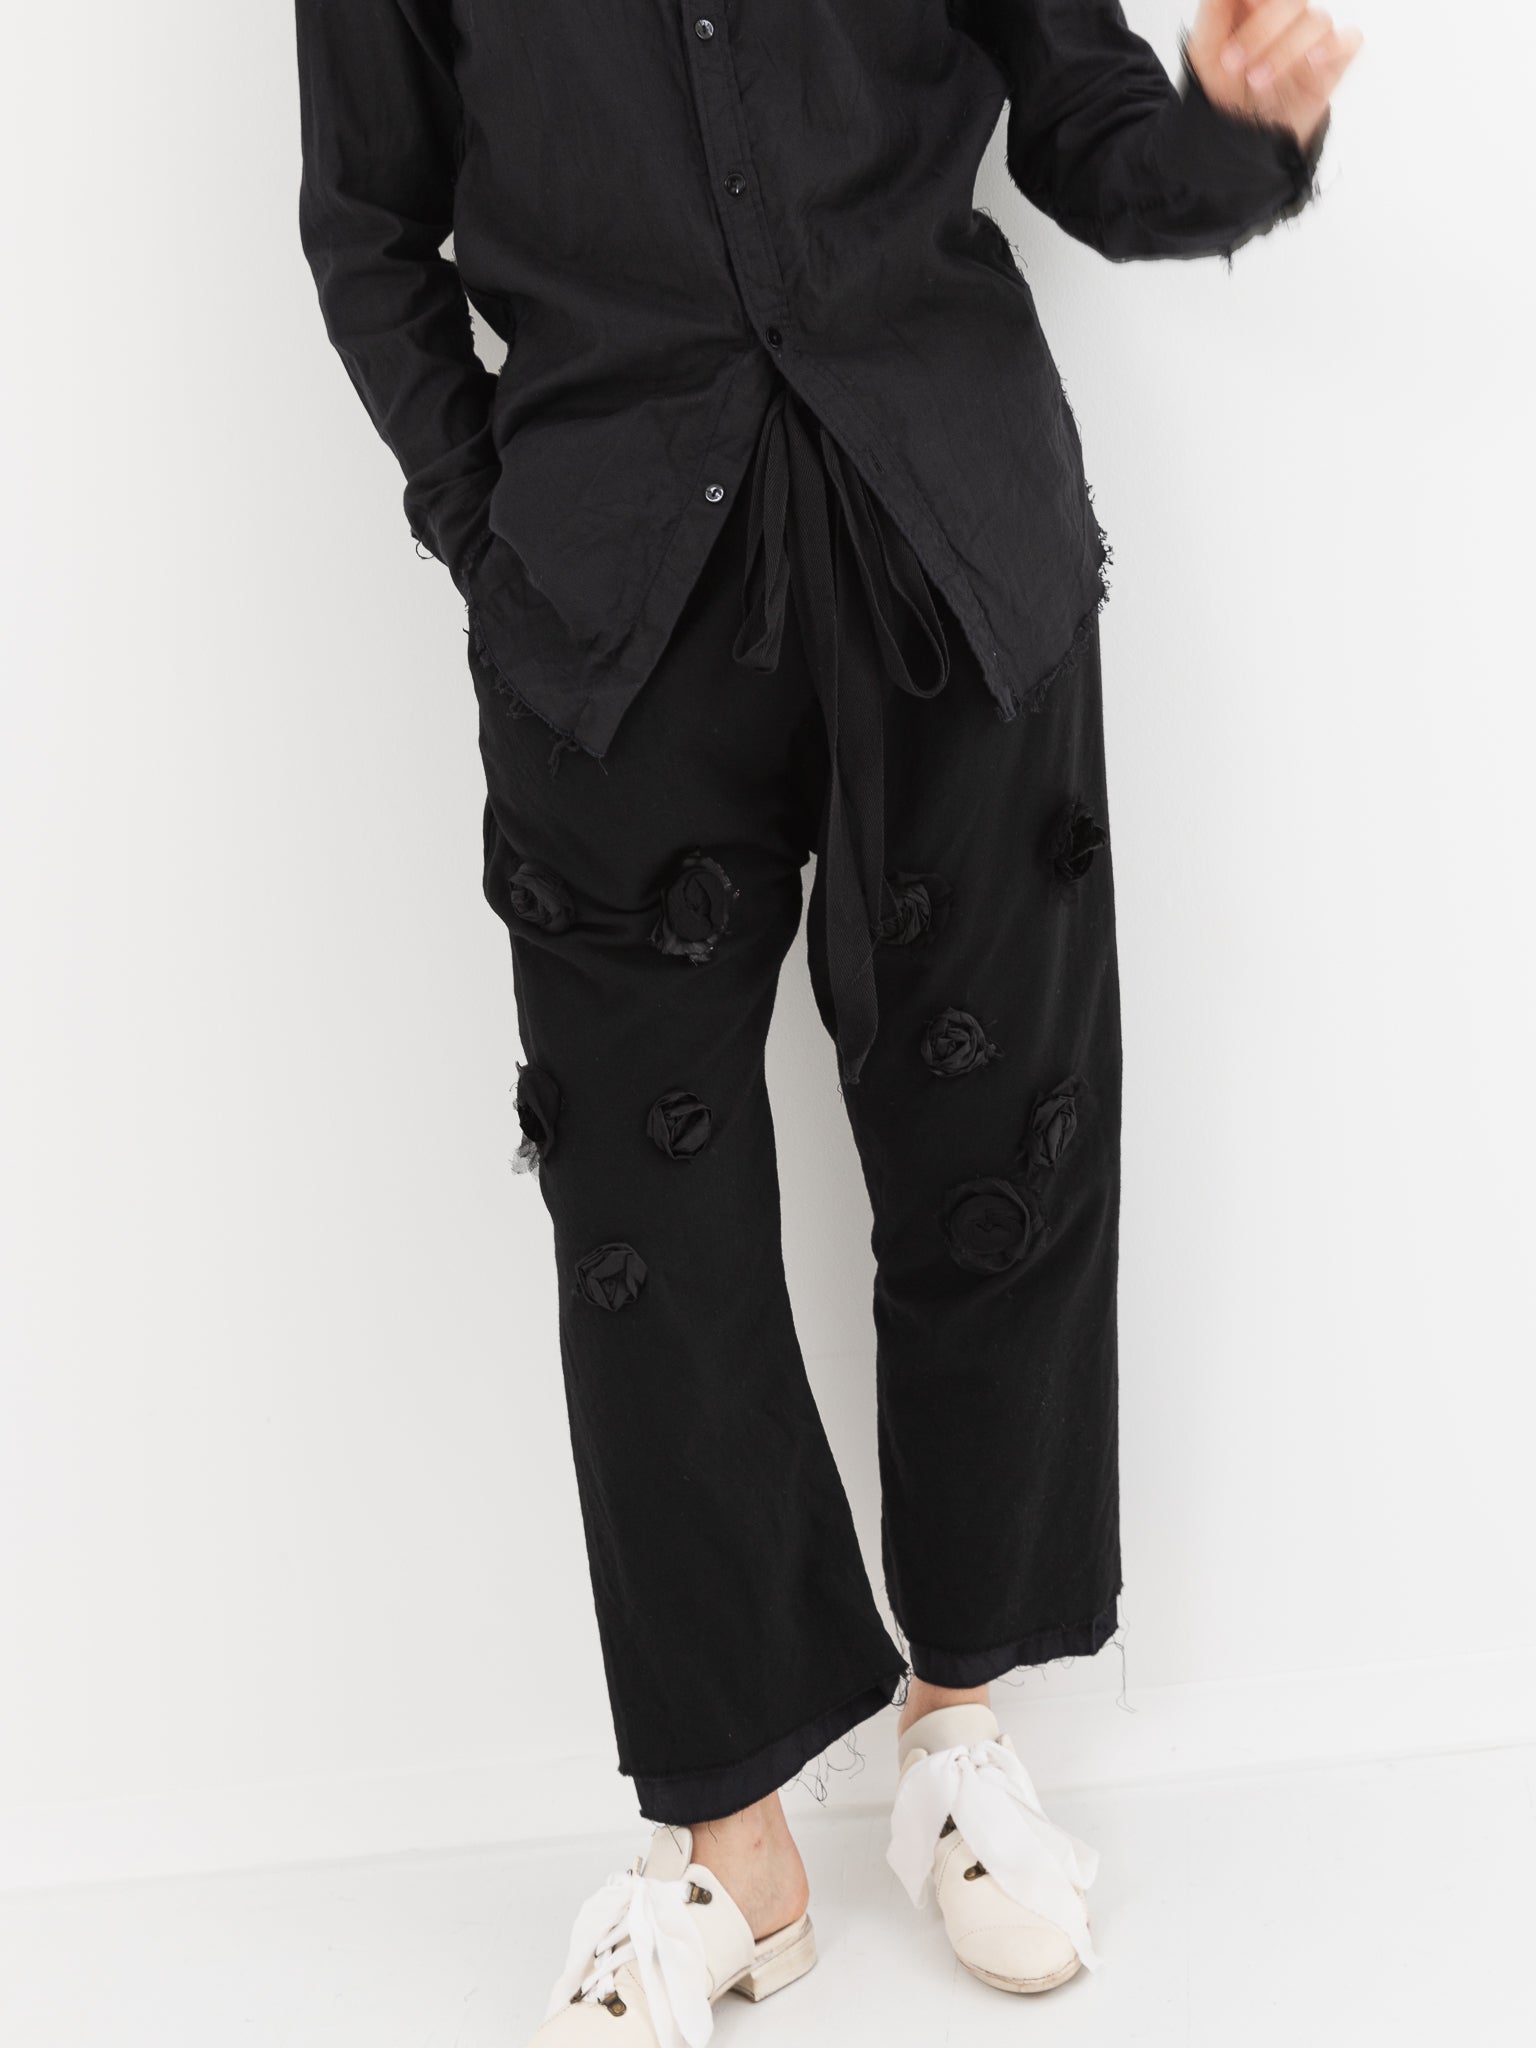 Elena Dawson Rosebud Pant in Black with Rosebuds - Worthwhile, Inc.